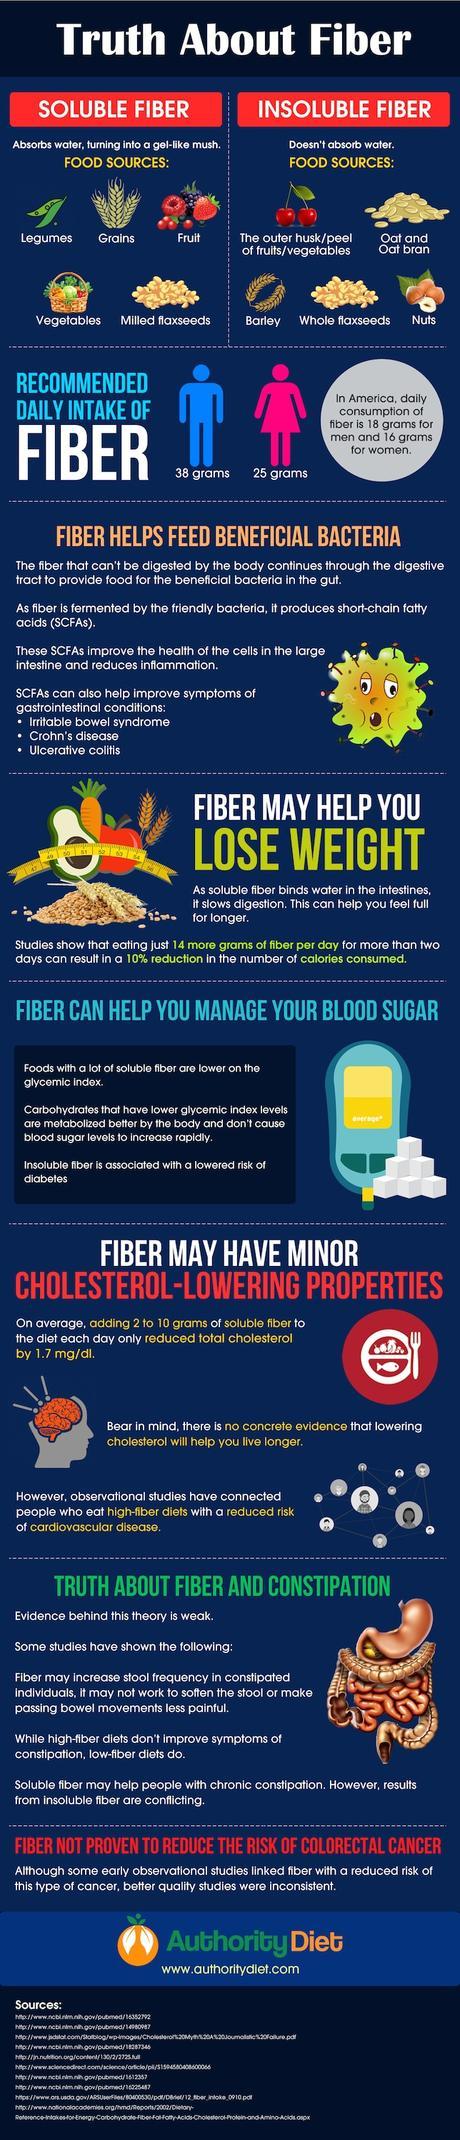 fiber health benefits infographic